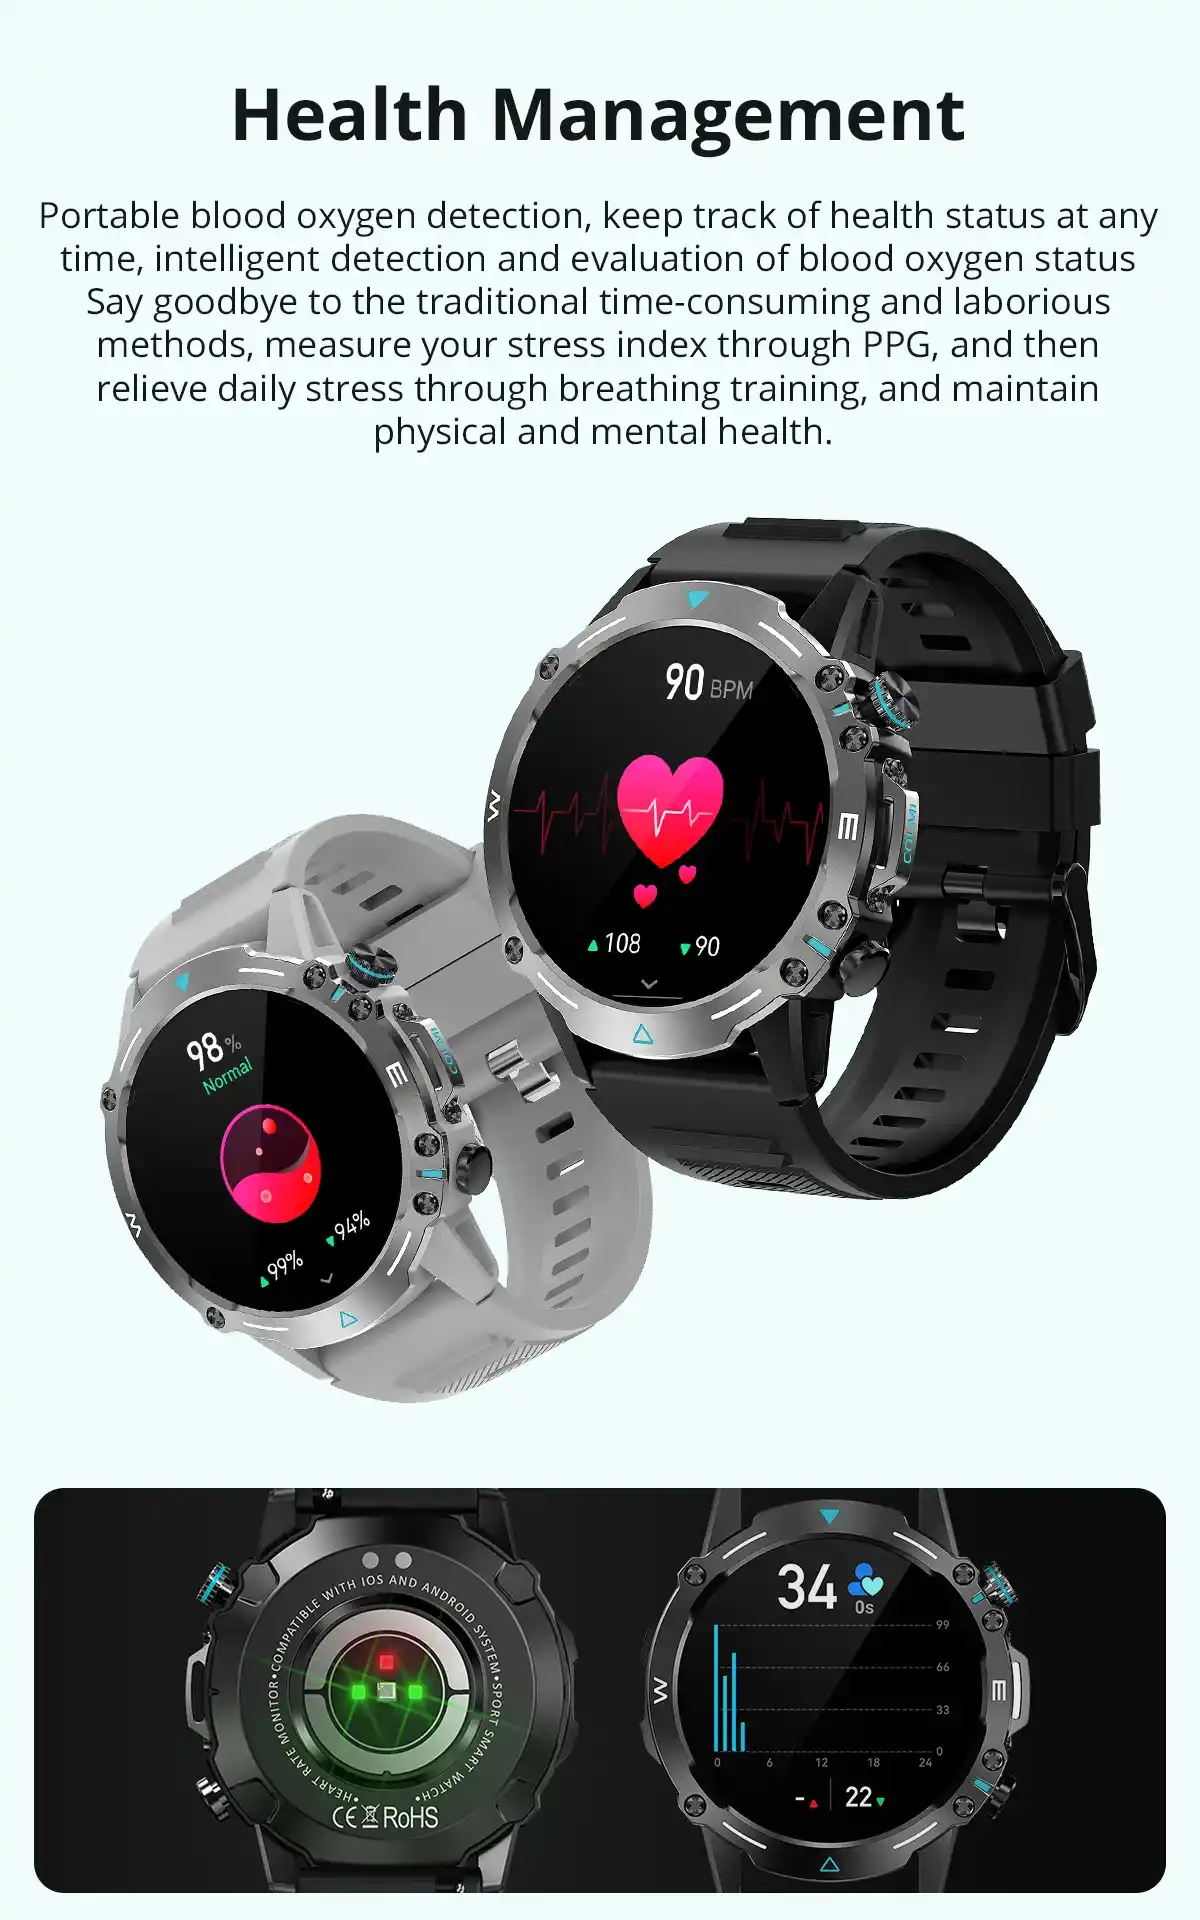 COLMI M42 Smartwatch 1.43″ AMOLED Display Voice Calling